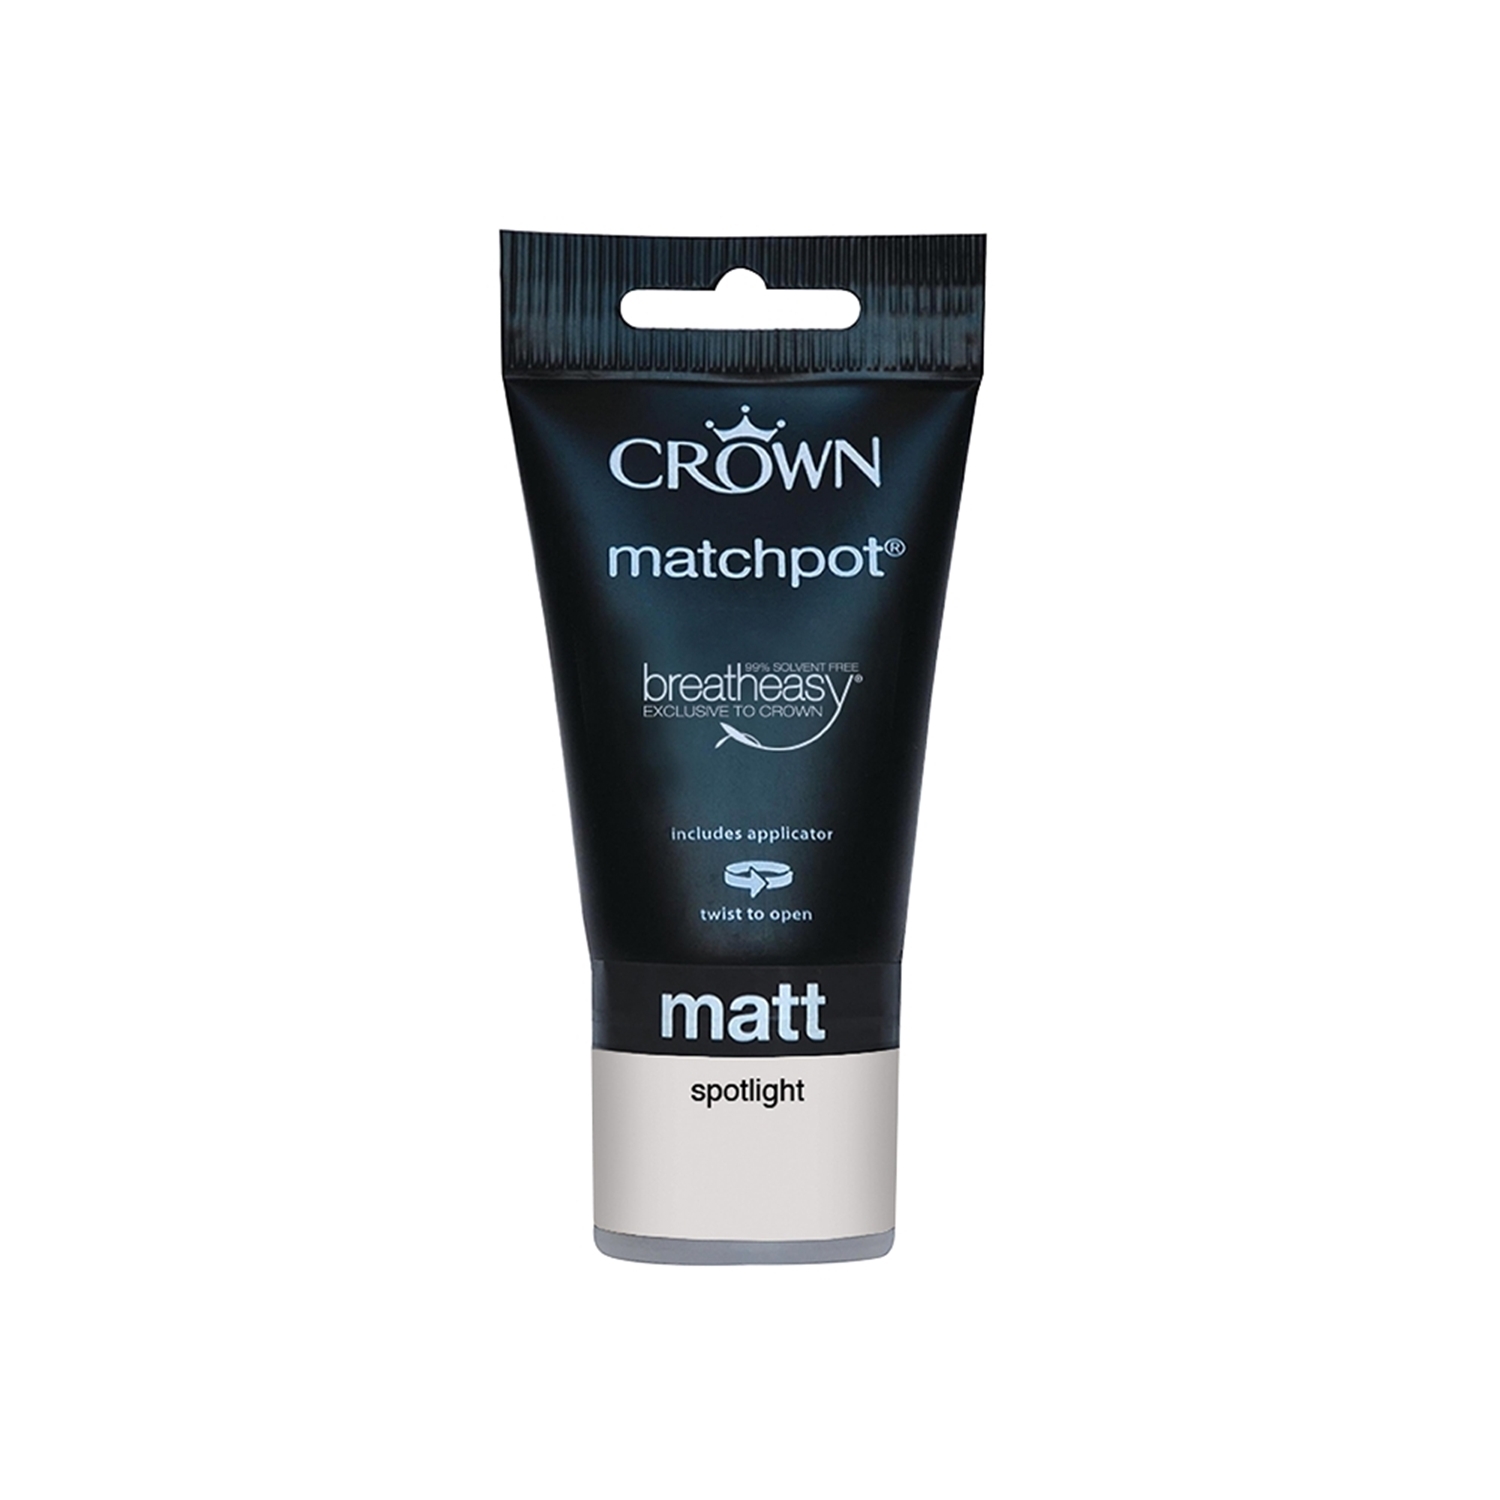 Crown SPot 75mllight Matt Breatheasy Tester Pot 75ml Image